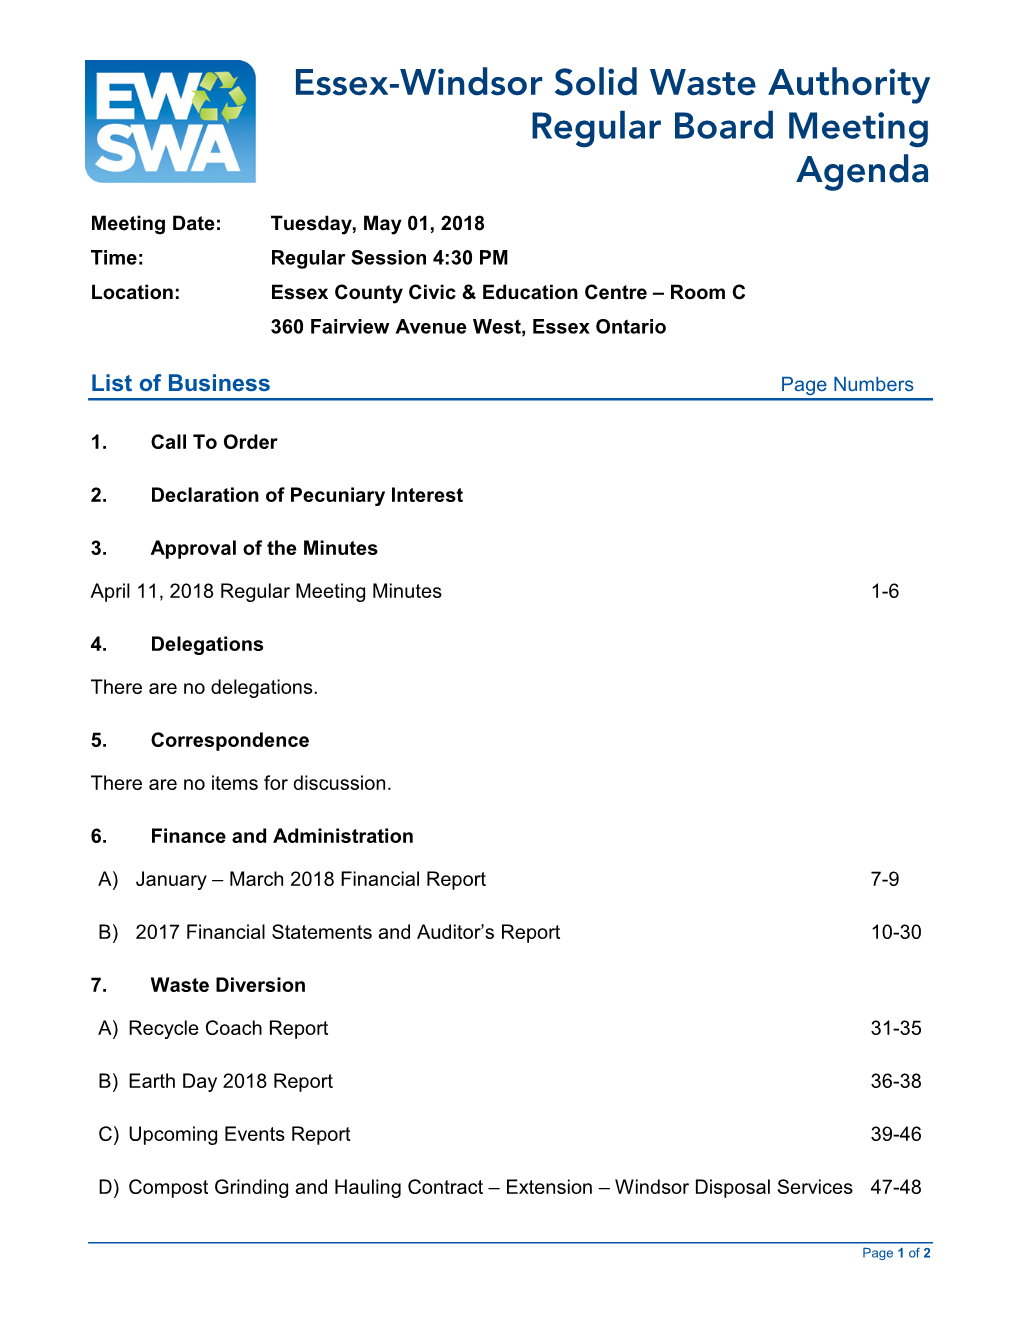 Aprill 11, 2018 Regular Board Meeting Minutes